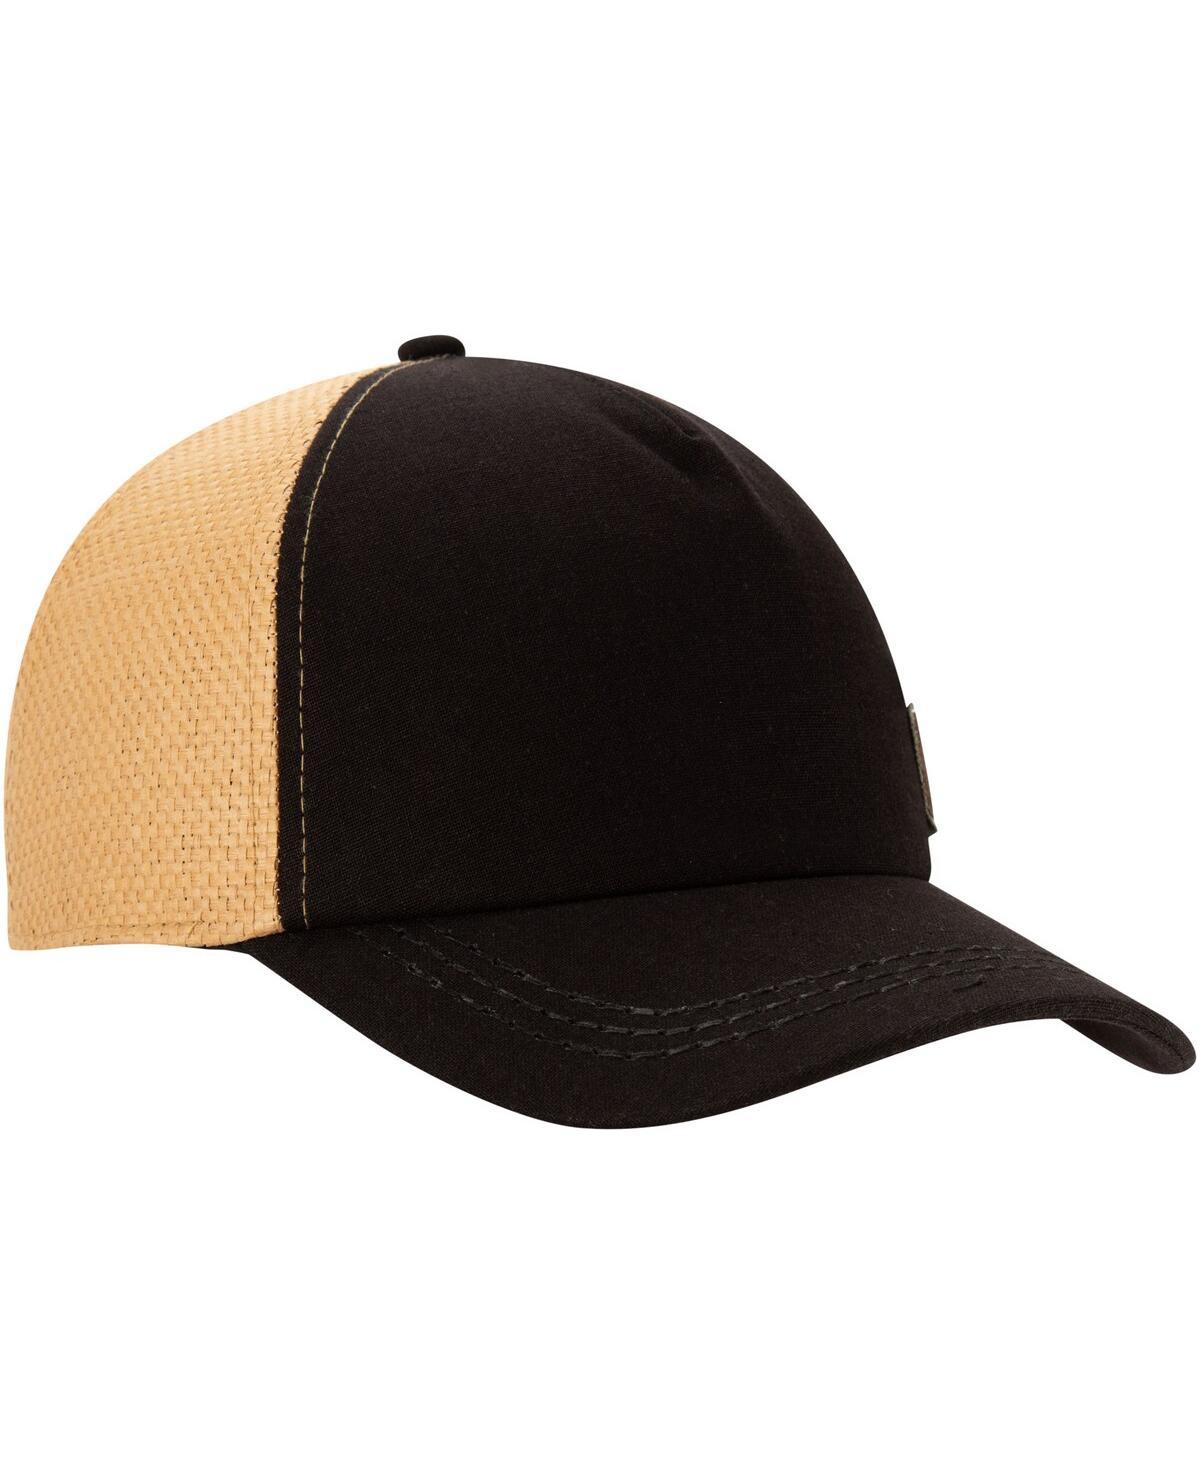 Shop Roxy Women's Quiksilver Black  Incognito Adjustable Trucker Hat